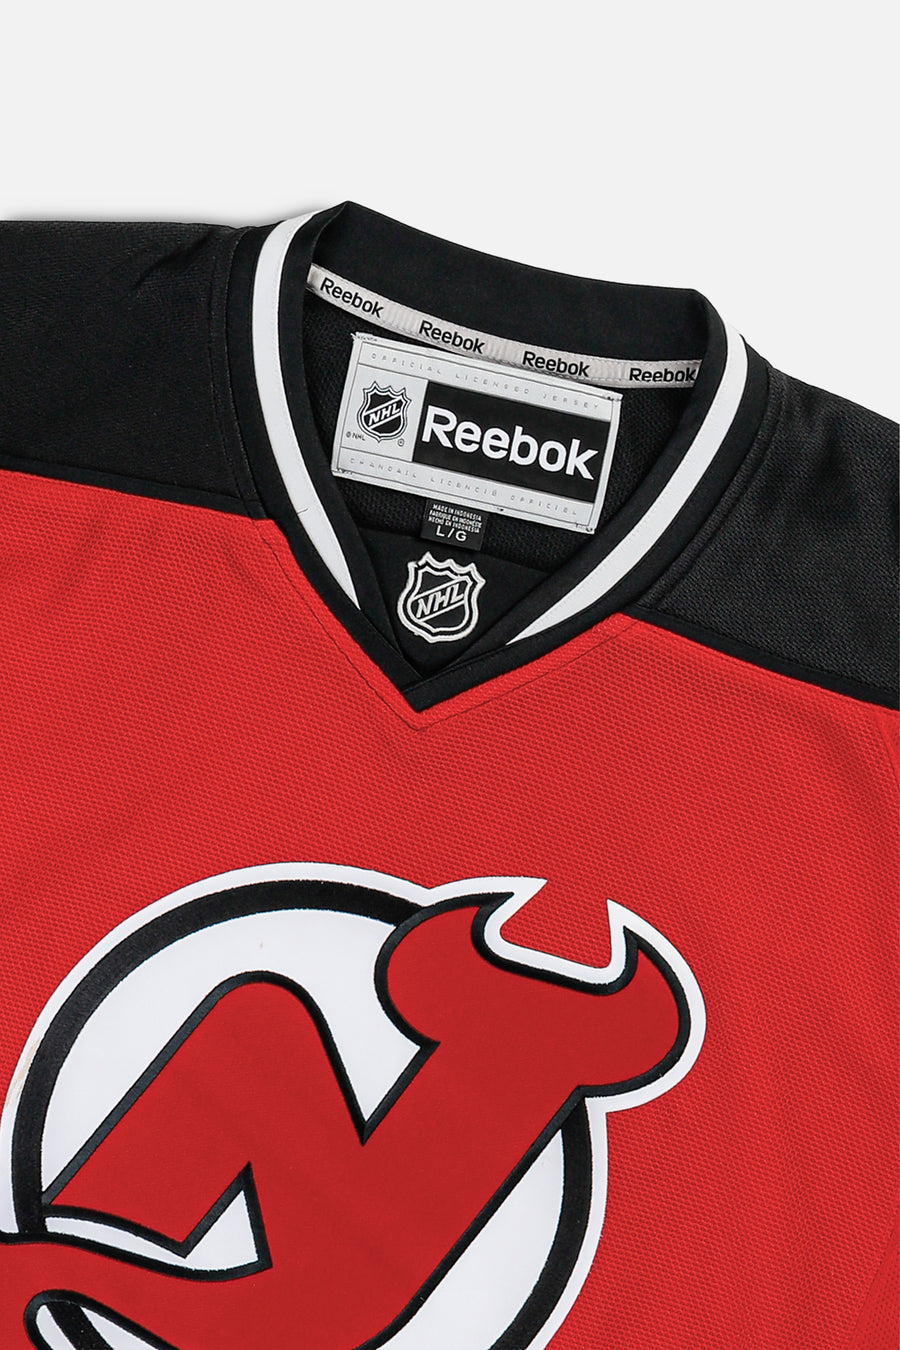 Vintage New Jersey Devils NHL Jersey - L